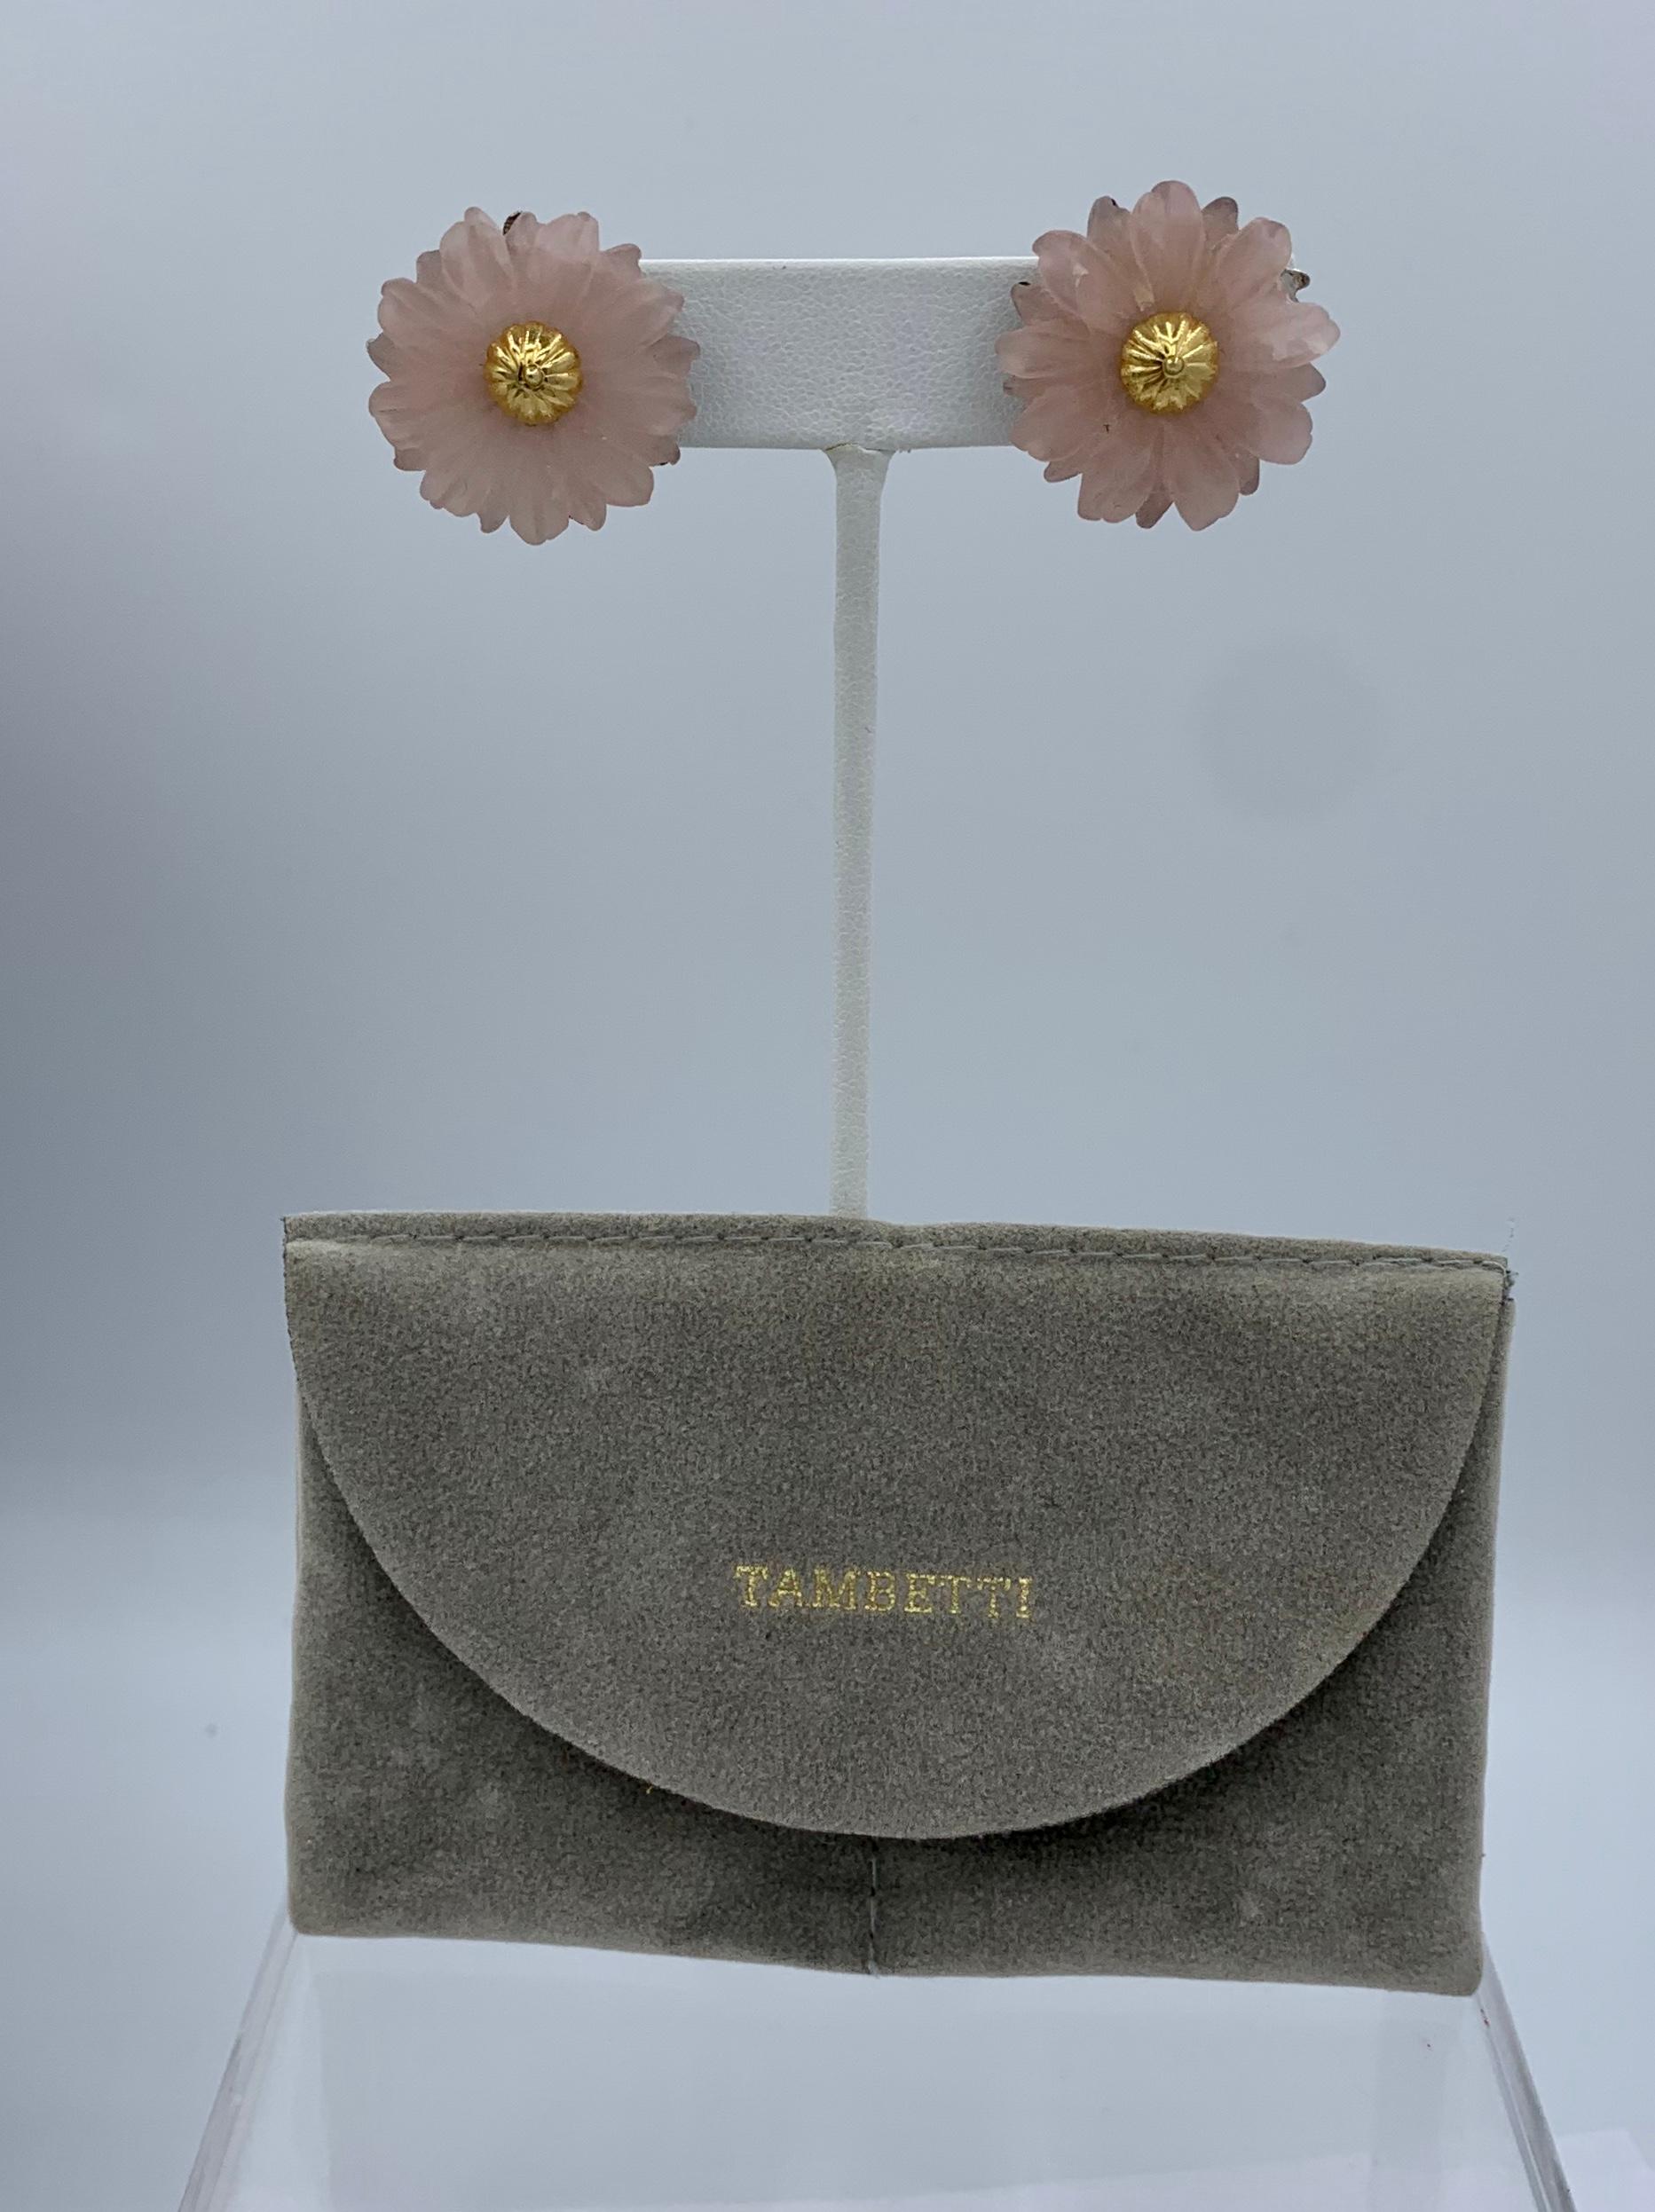 Tambetti Rose Quartz 18 Karat Gold Earrings Estate Barbara Taylor Bradford OBE In Good Condition For Sale In New York, NY